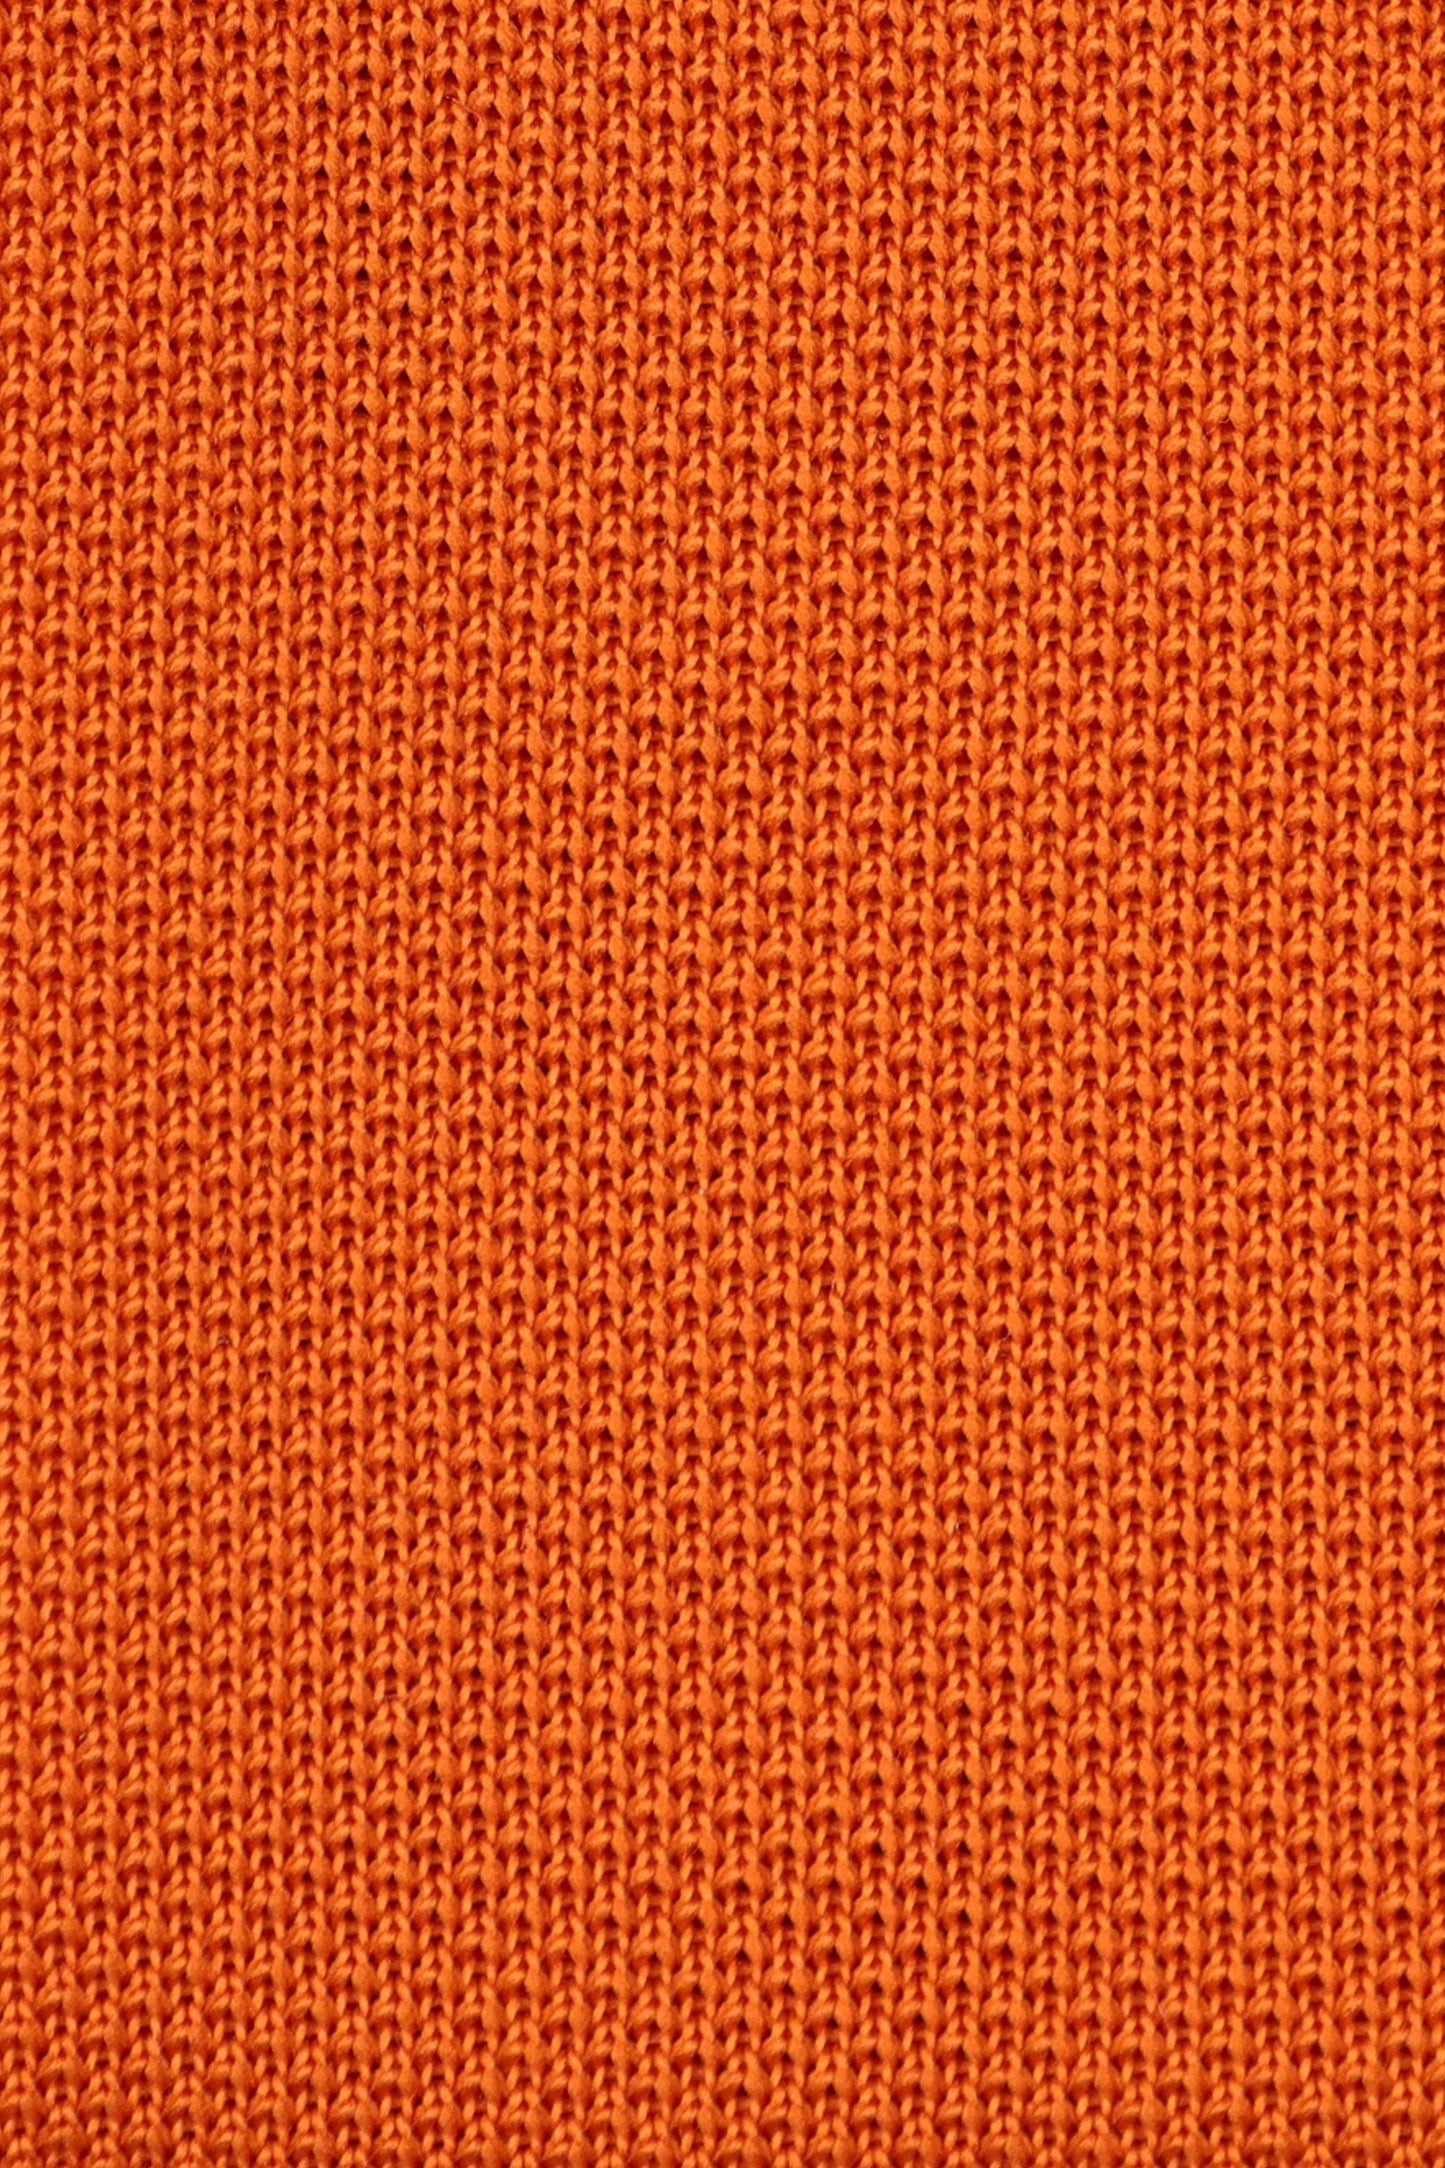 100% Polyester Knitted Pocket Square - Orange